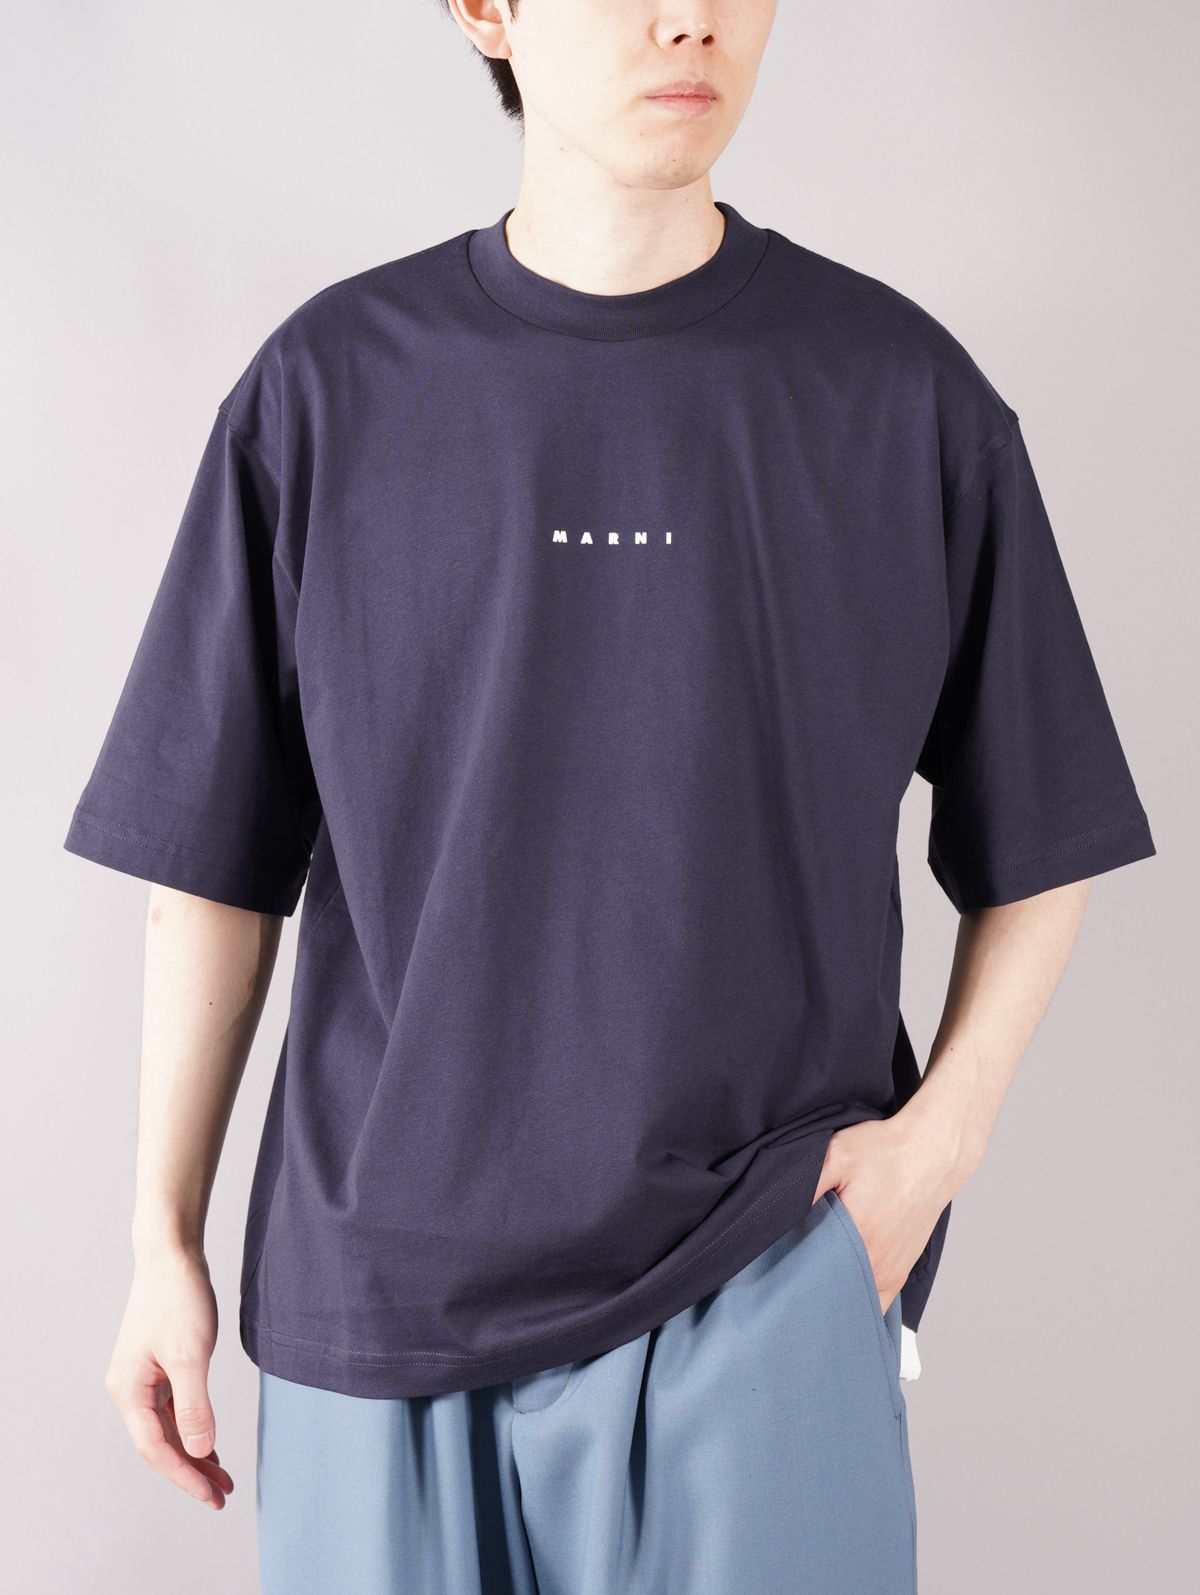 LOGO T-SHIRT / ロゴ Tシャツ (ホワイト) - 46